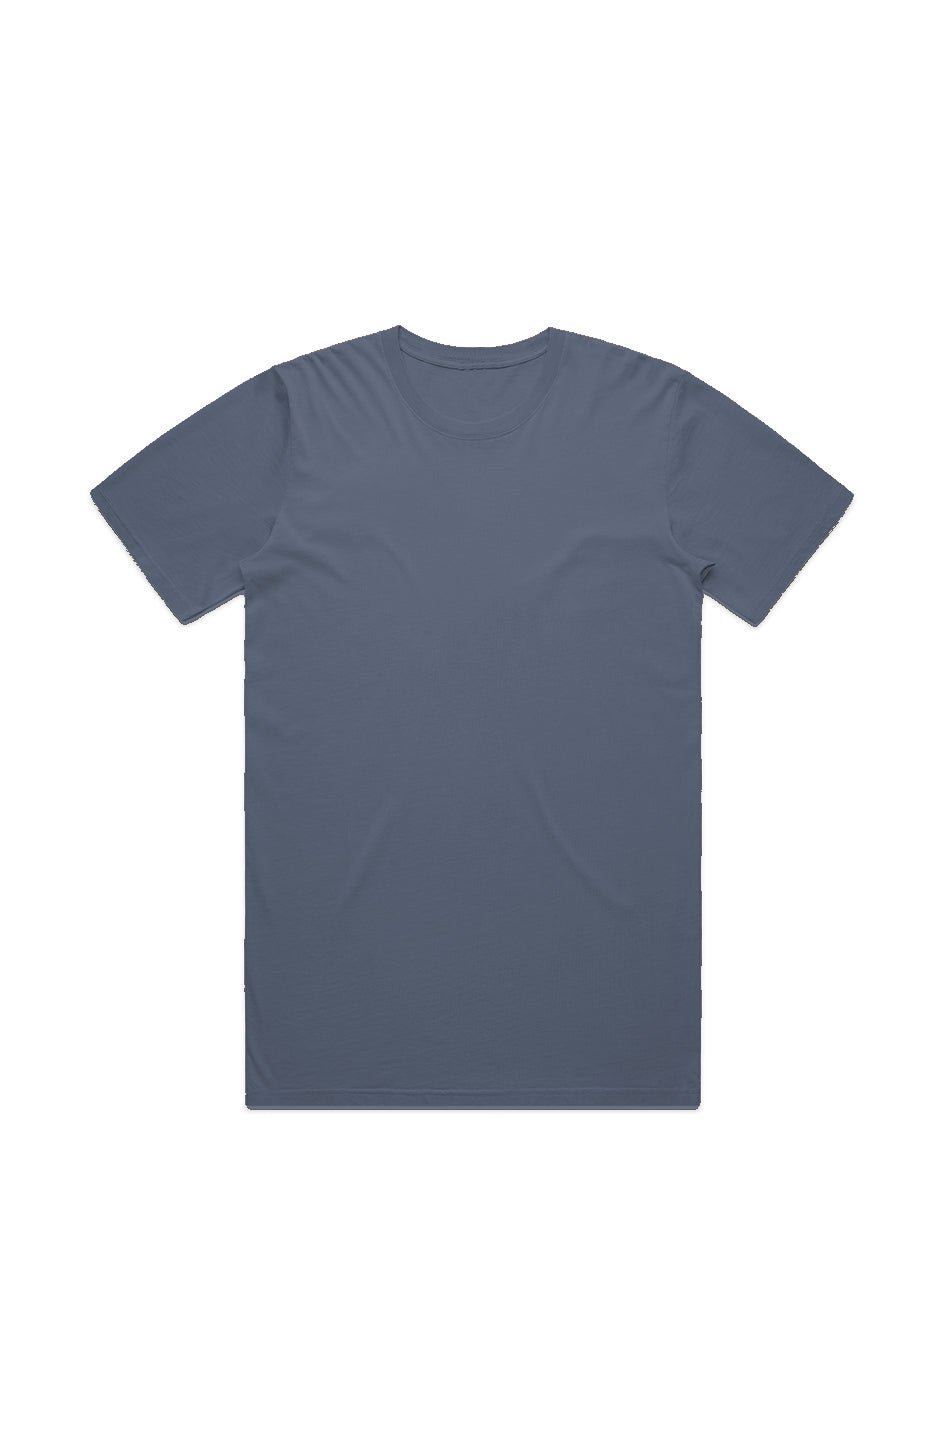 Men's Premium Faded Blue T-shirt - Men's T-Shirts - Apliiq - Men's Premium Faded Blue T-shirt - APQ-4660856S6A0 - s - Faded Blue - Dragon Foxx™ - Dragon Foxx™ Men's Shirts - Dragon Foxx™ Men's T-shirt